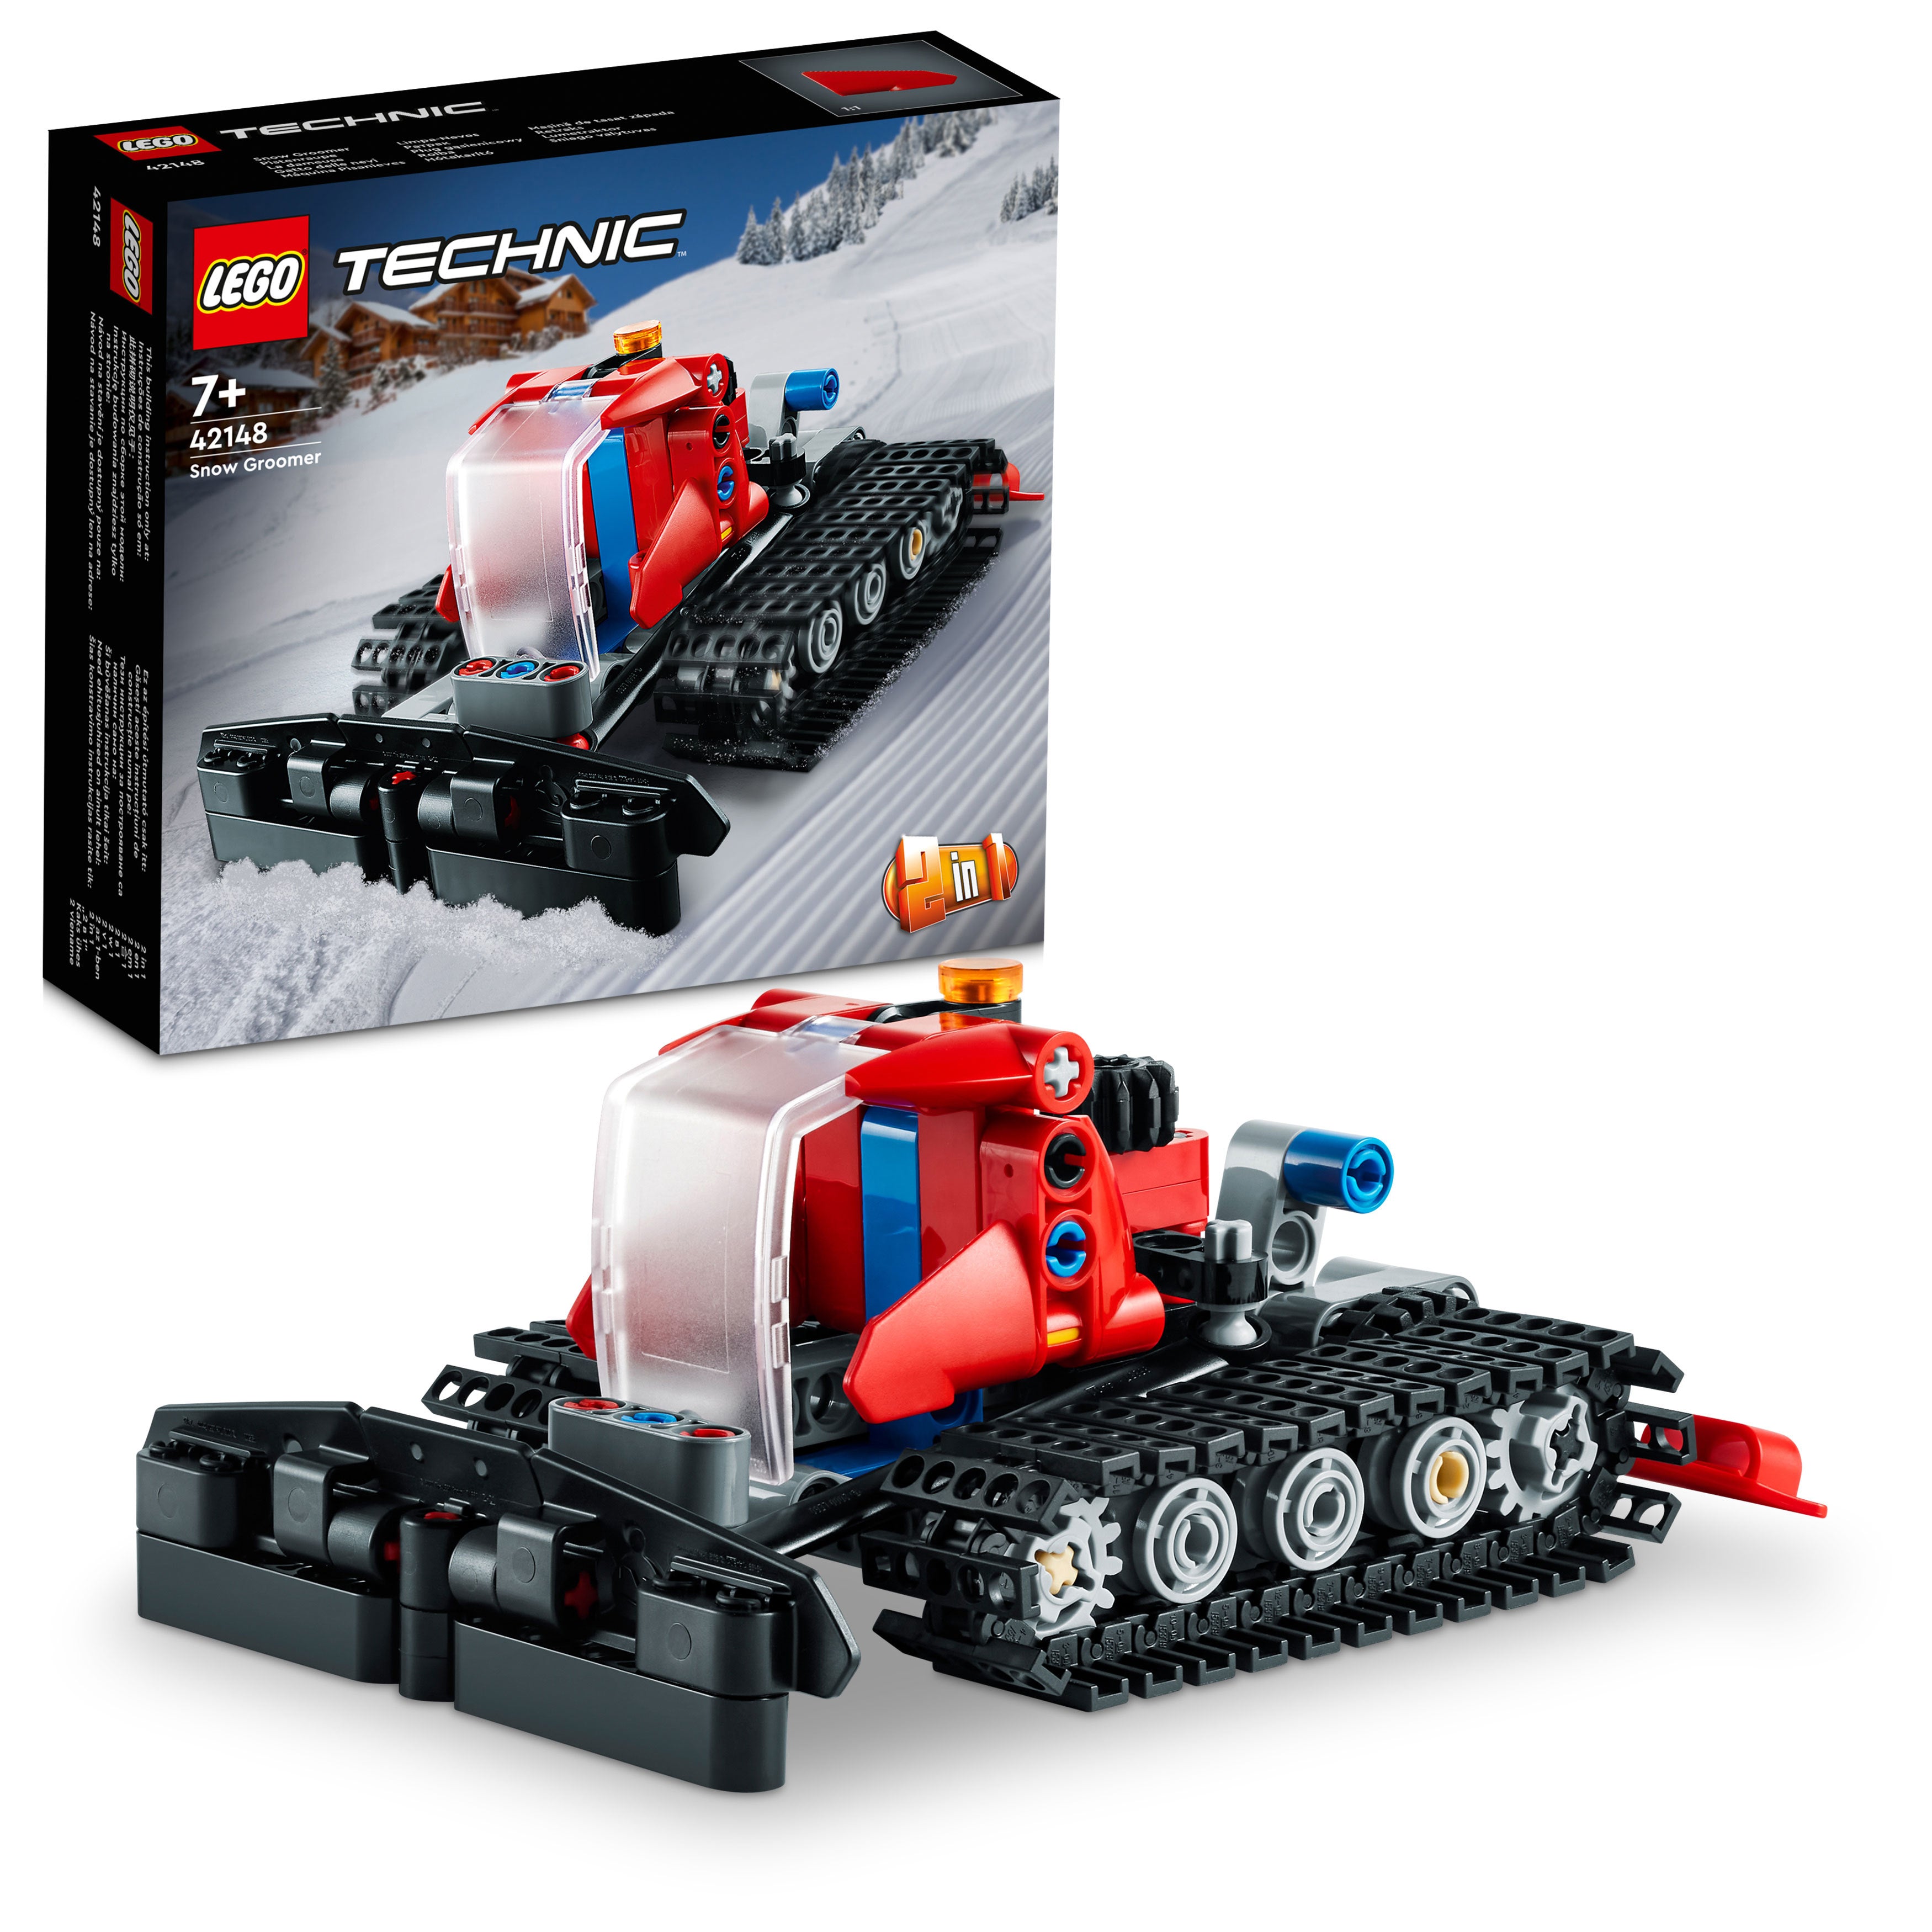 Lego 42148 Snow Groomer